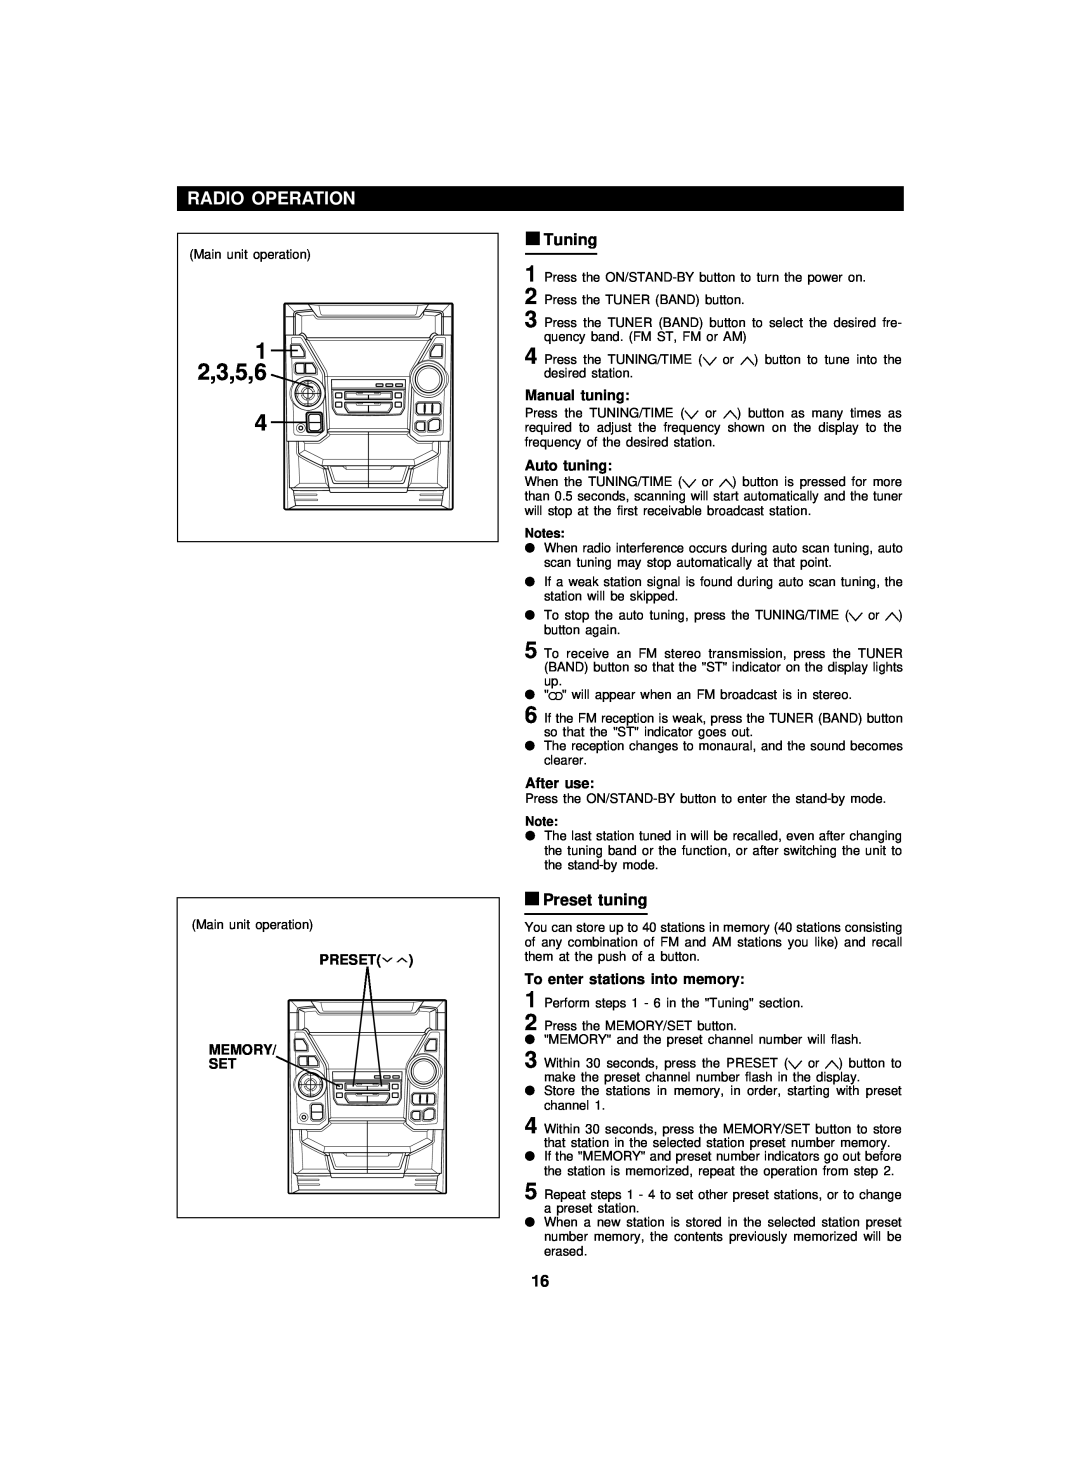 Sharp CD-PC3500 operation manual 1 2,3,5,6, Radio Operation, Preset Memory Set, Manual tuning, Auto tuning, After use 